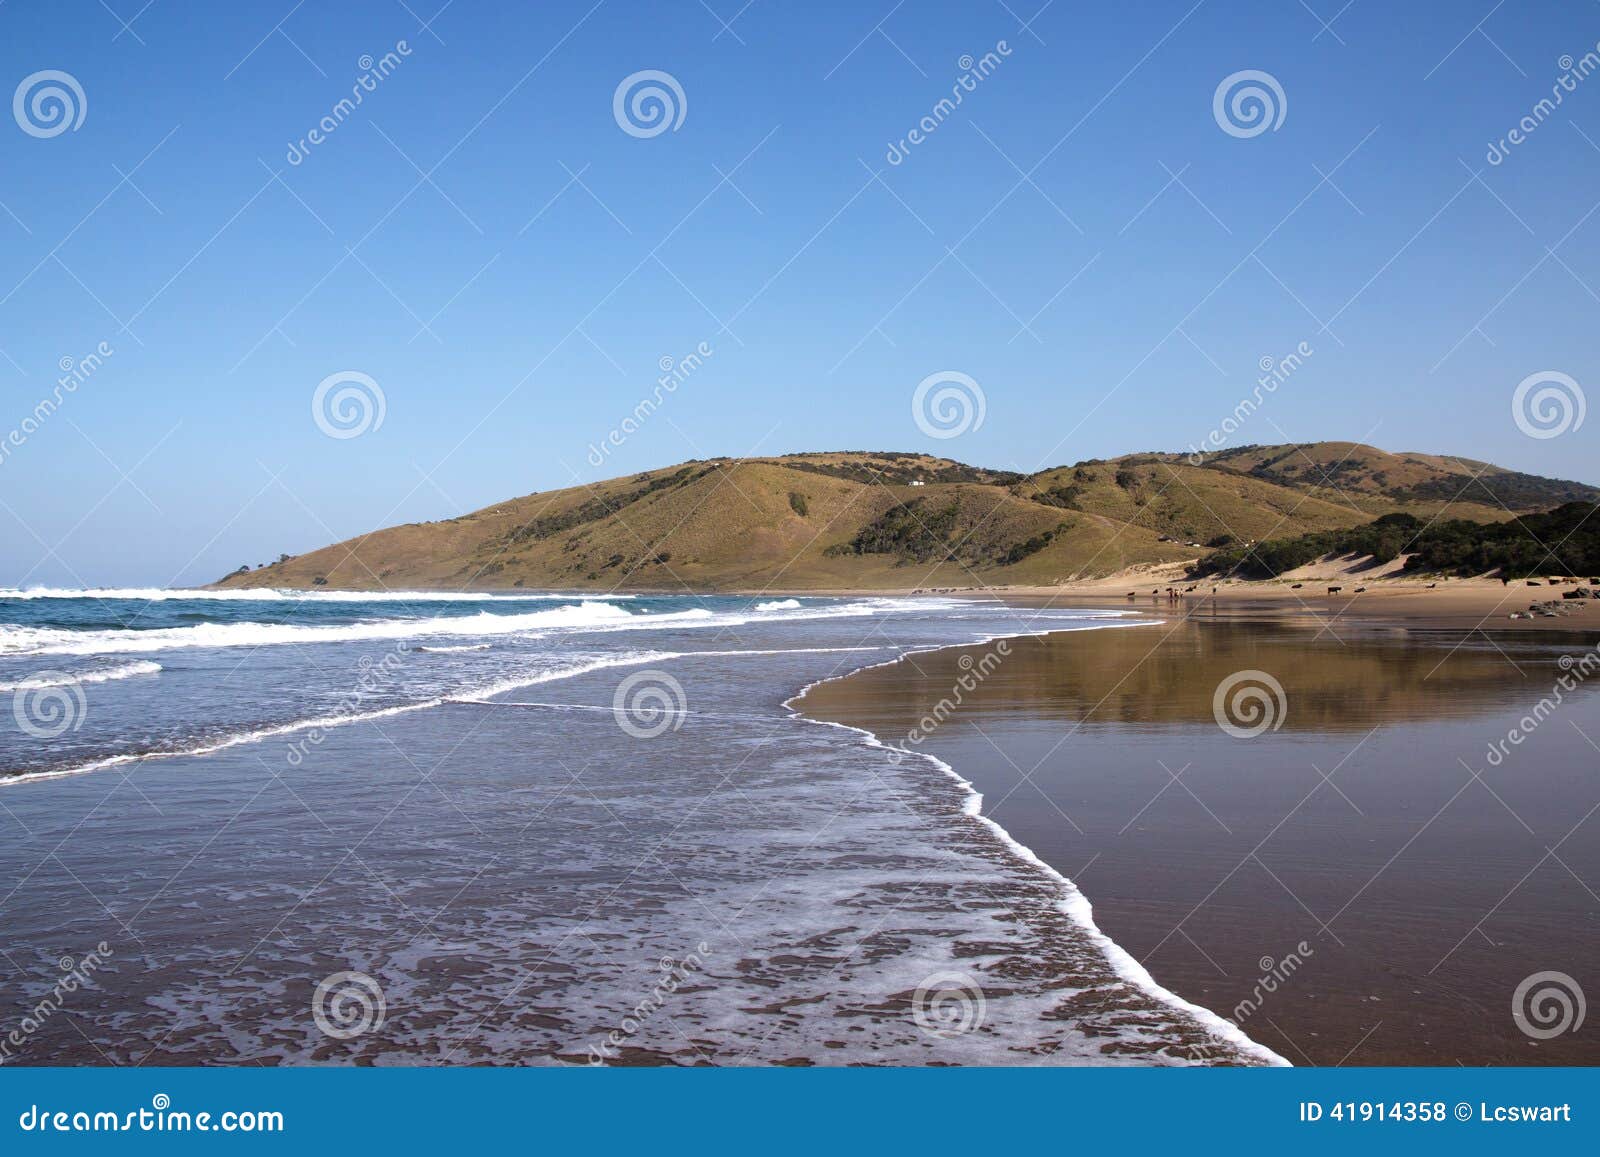 outgoing tide on wild coast beach, transkei, south